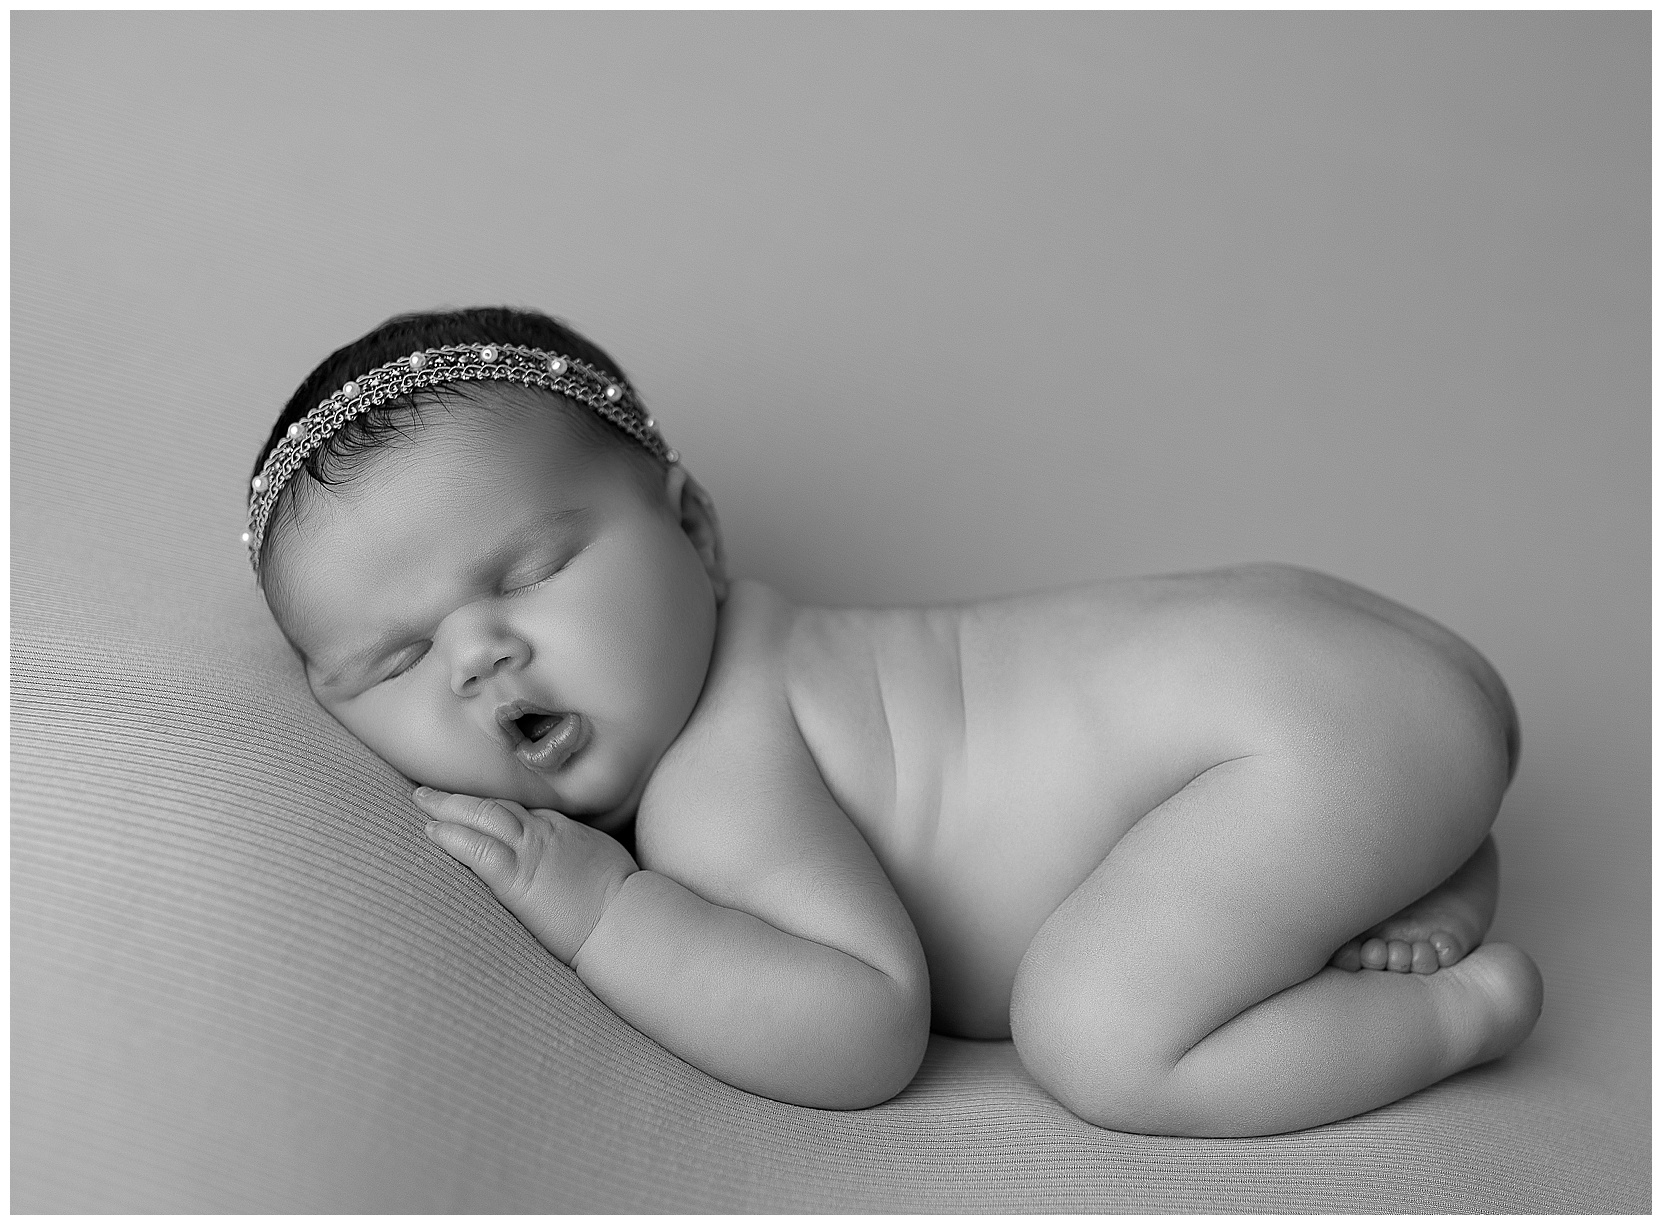 curled up, sleeping baby girl black/white photo